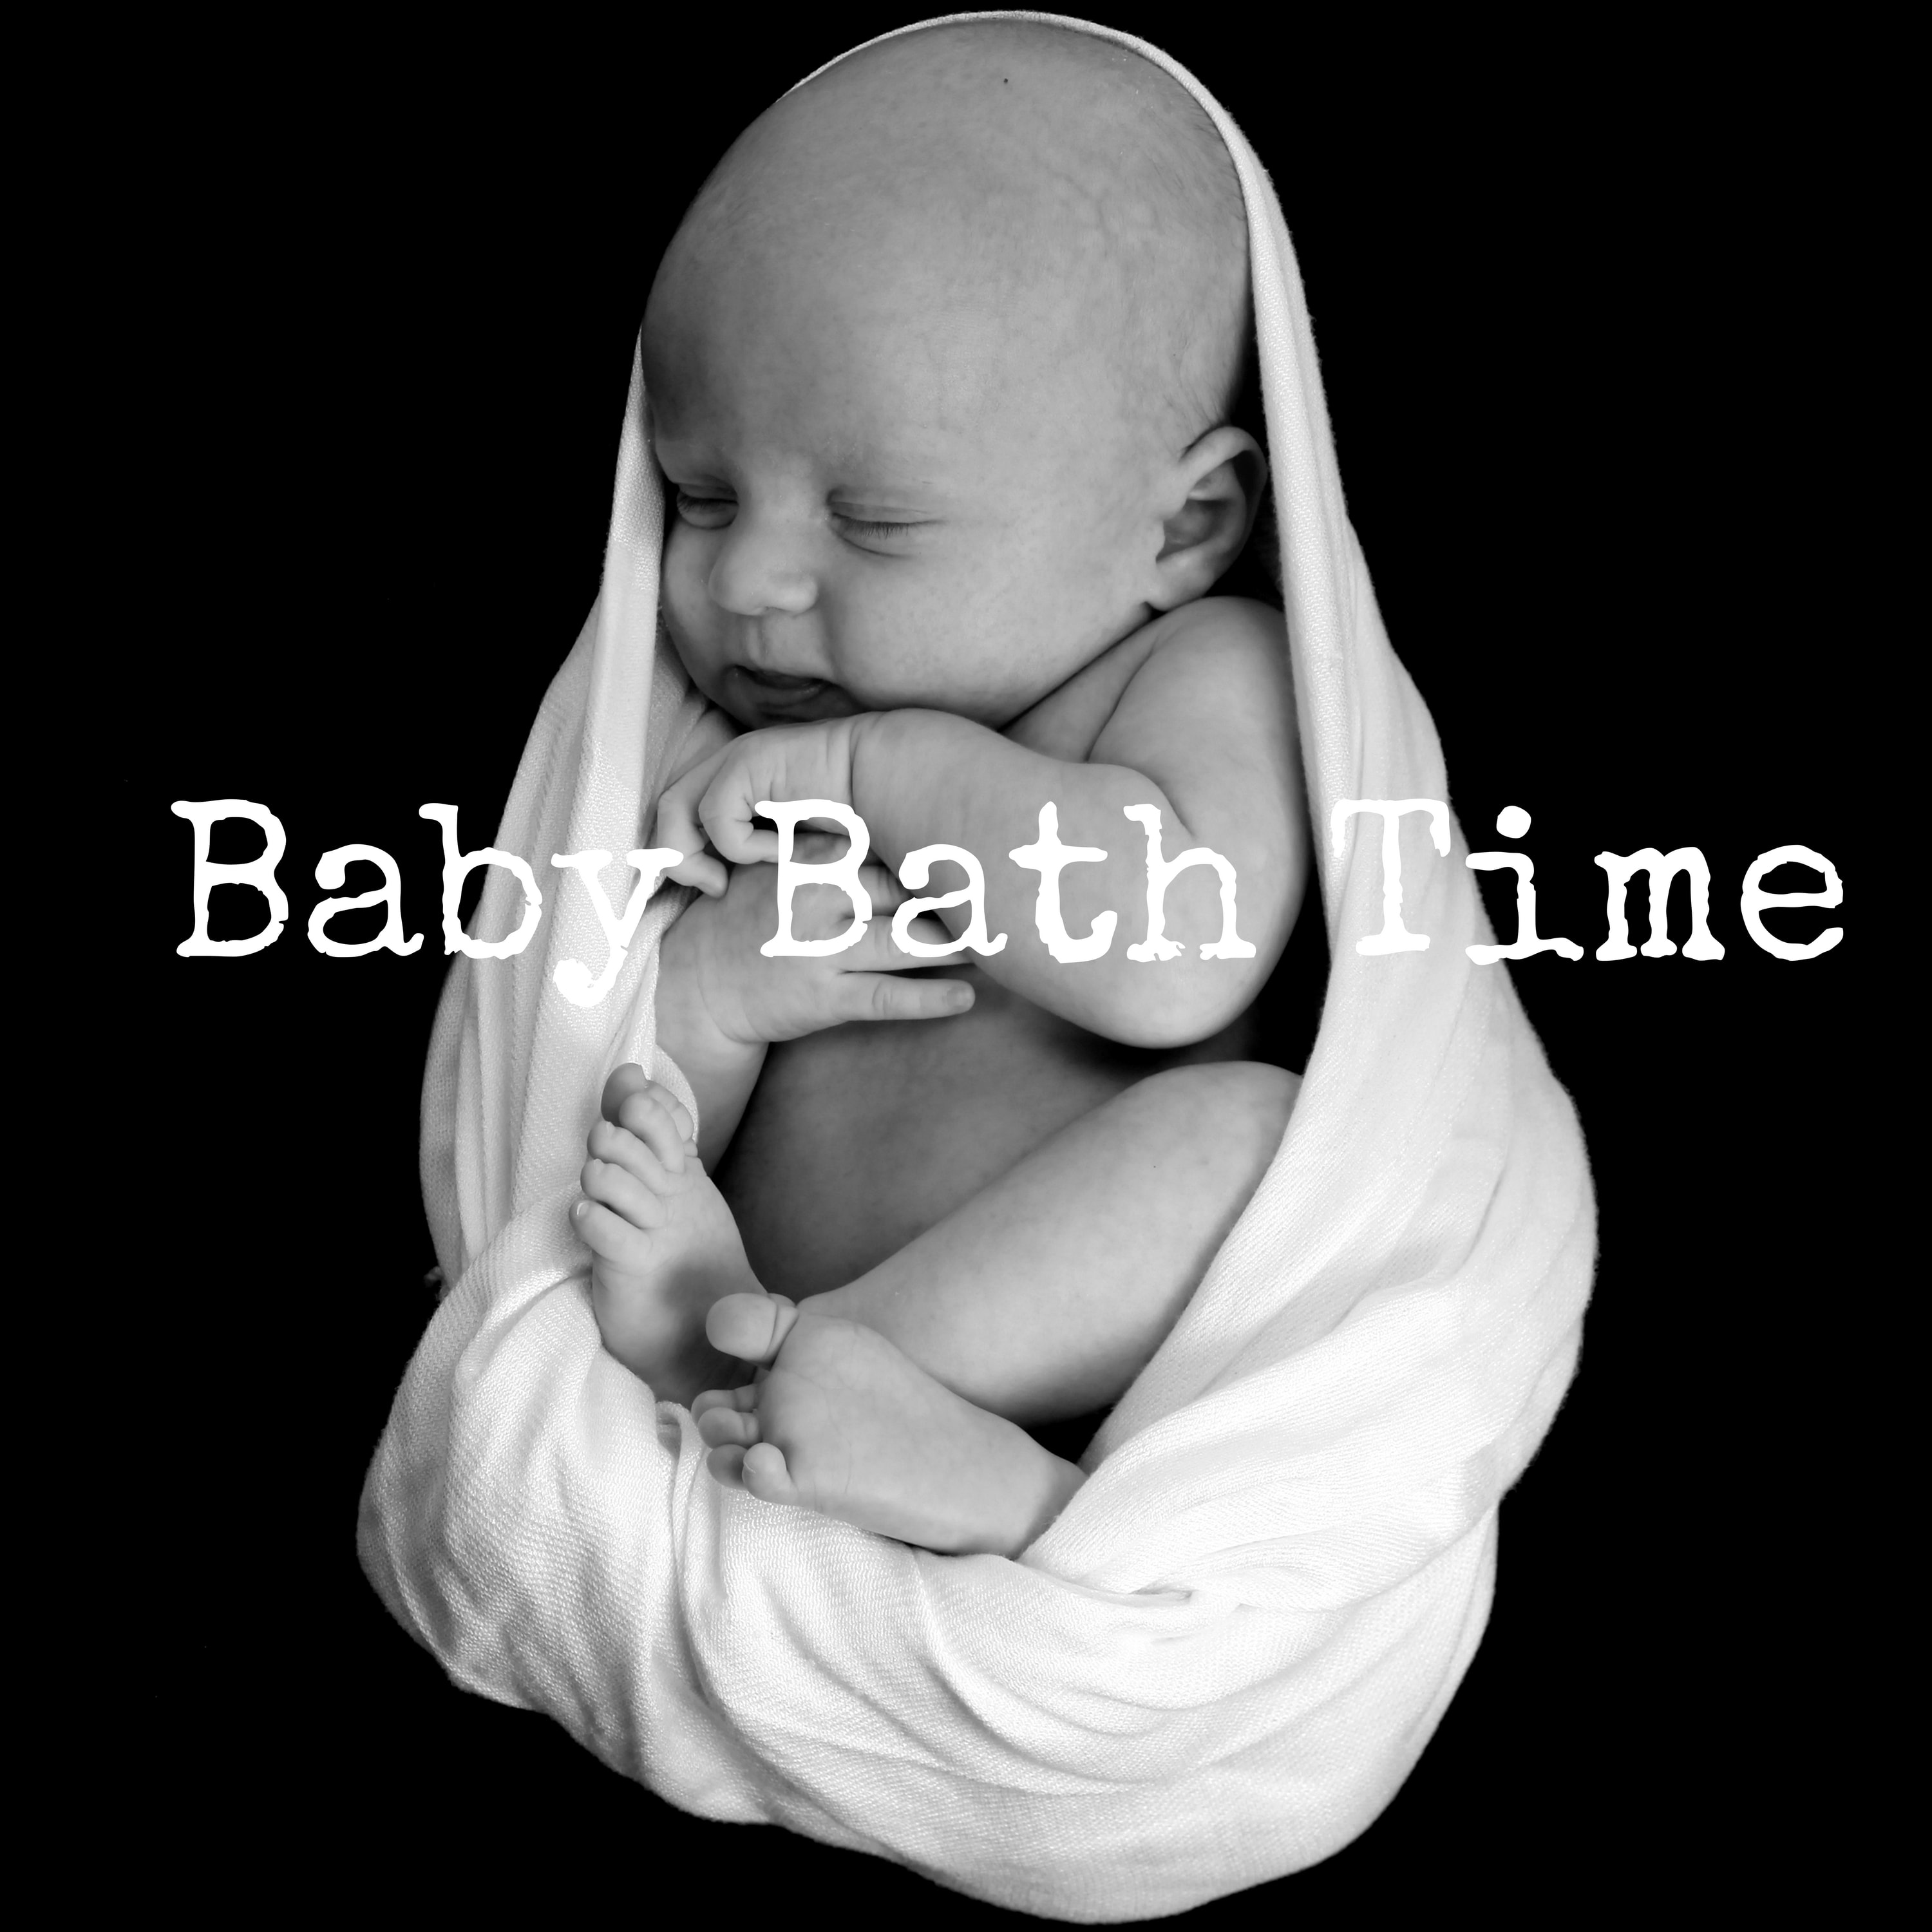 Baby Bath Time